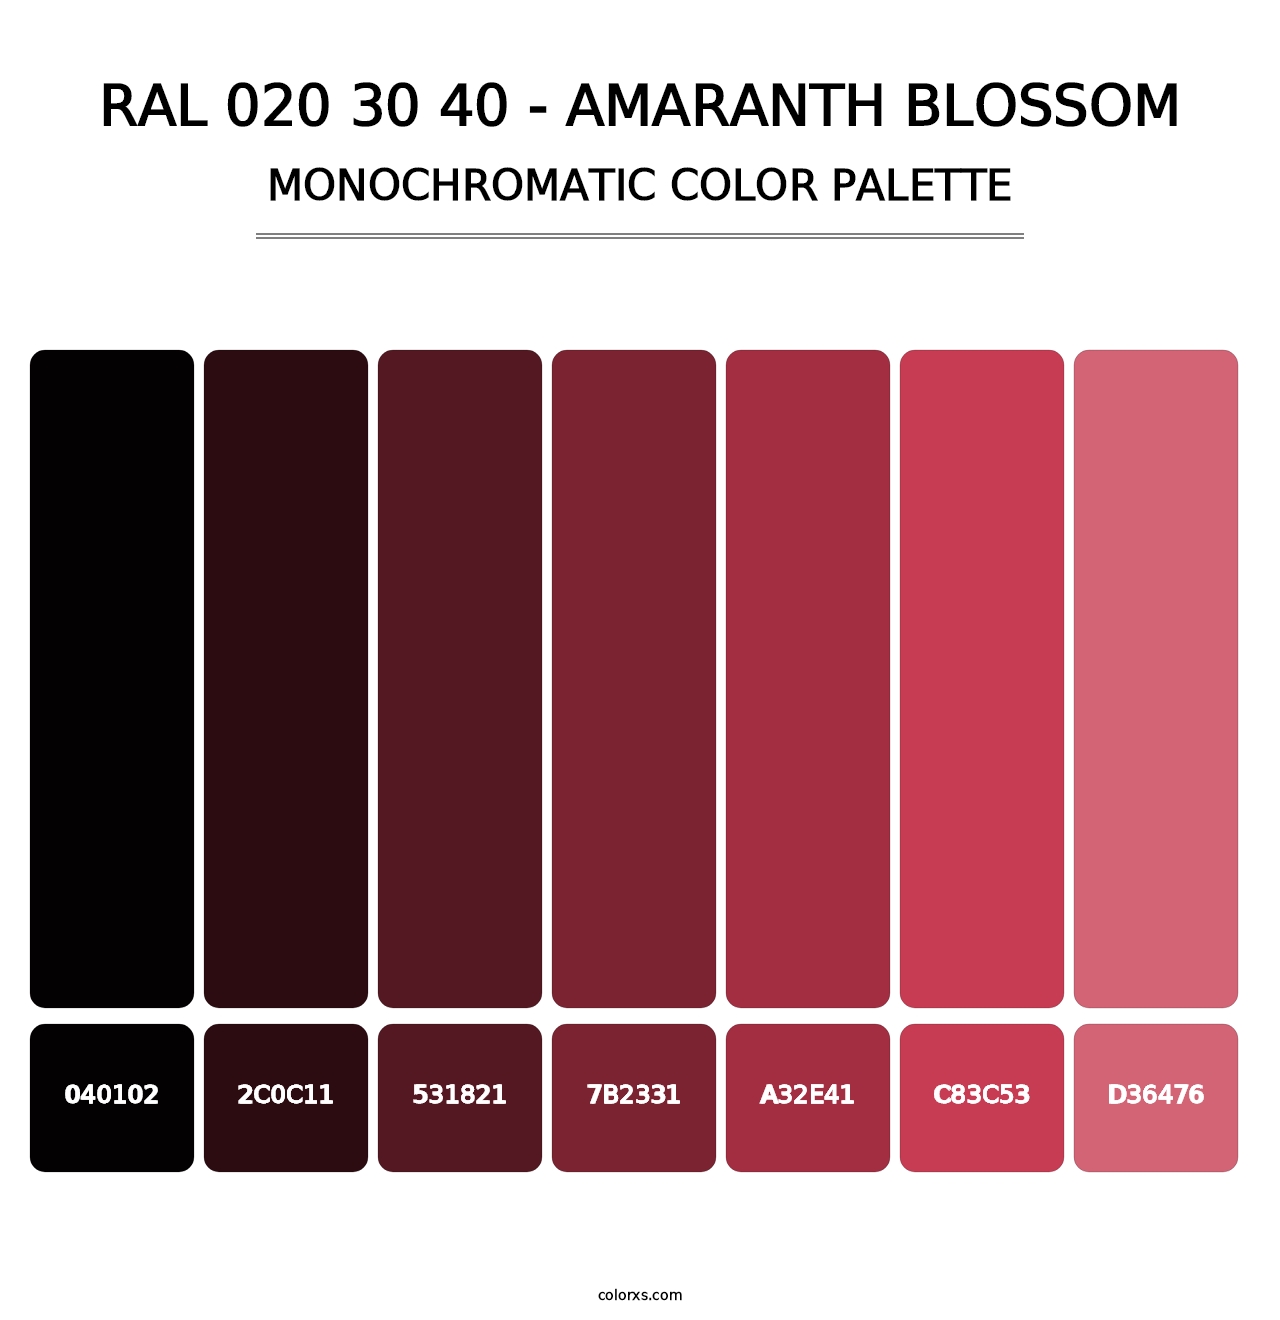 RAL 020 30 40 - Amaranth Blossom - Monochromatic Color Palette